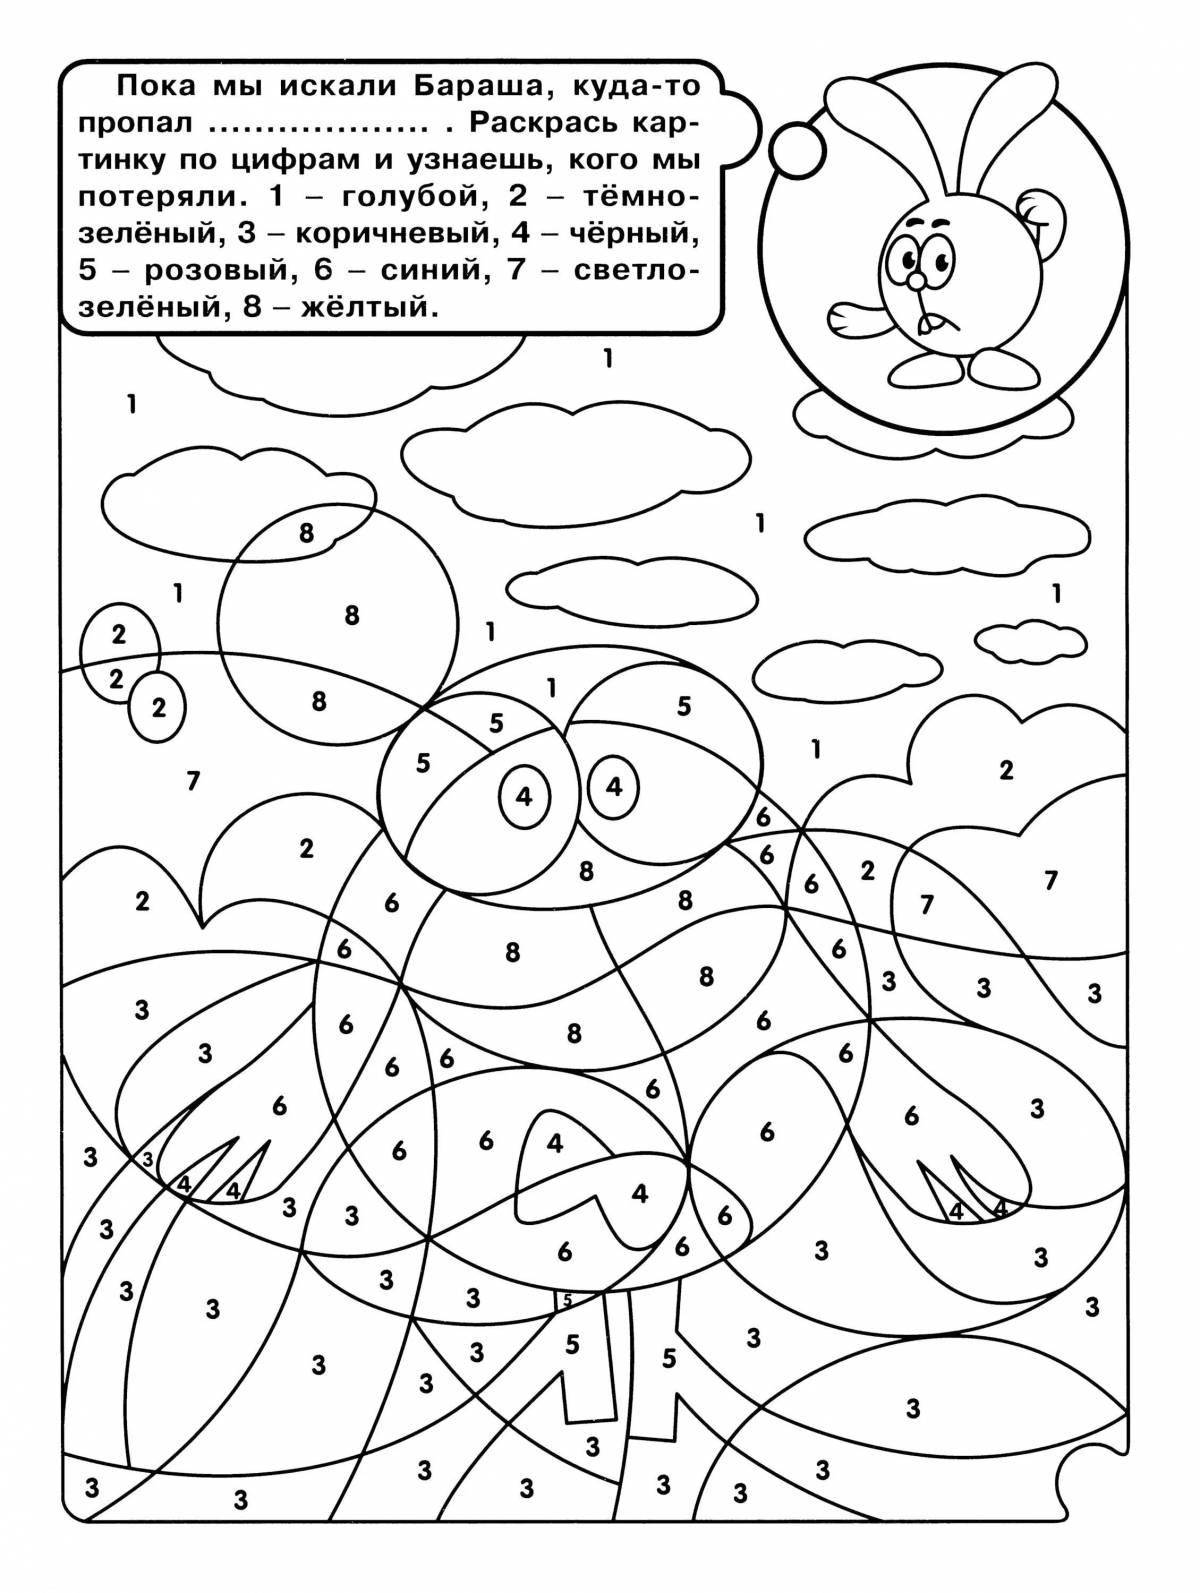 A fun coloring book for preschoolers